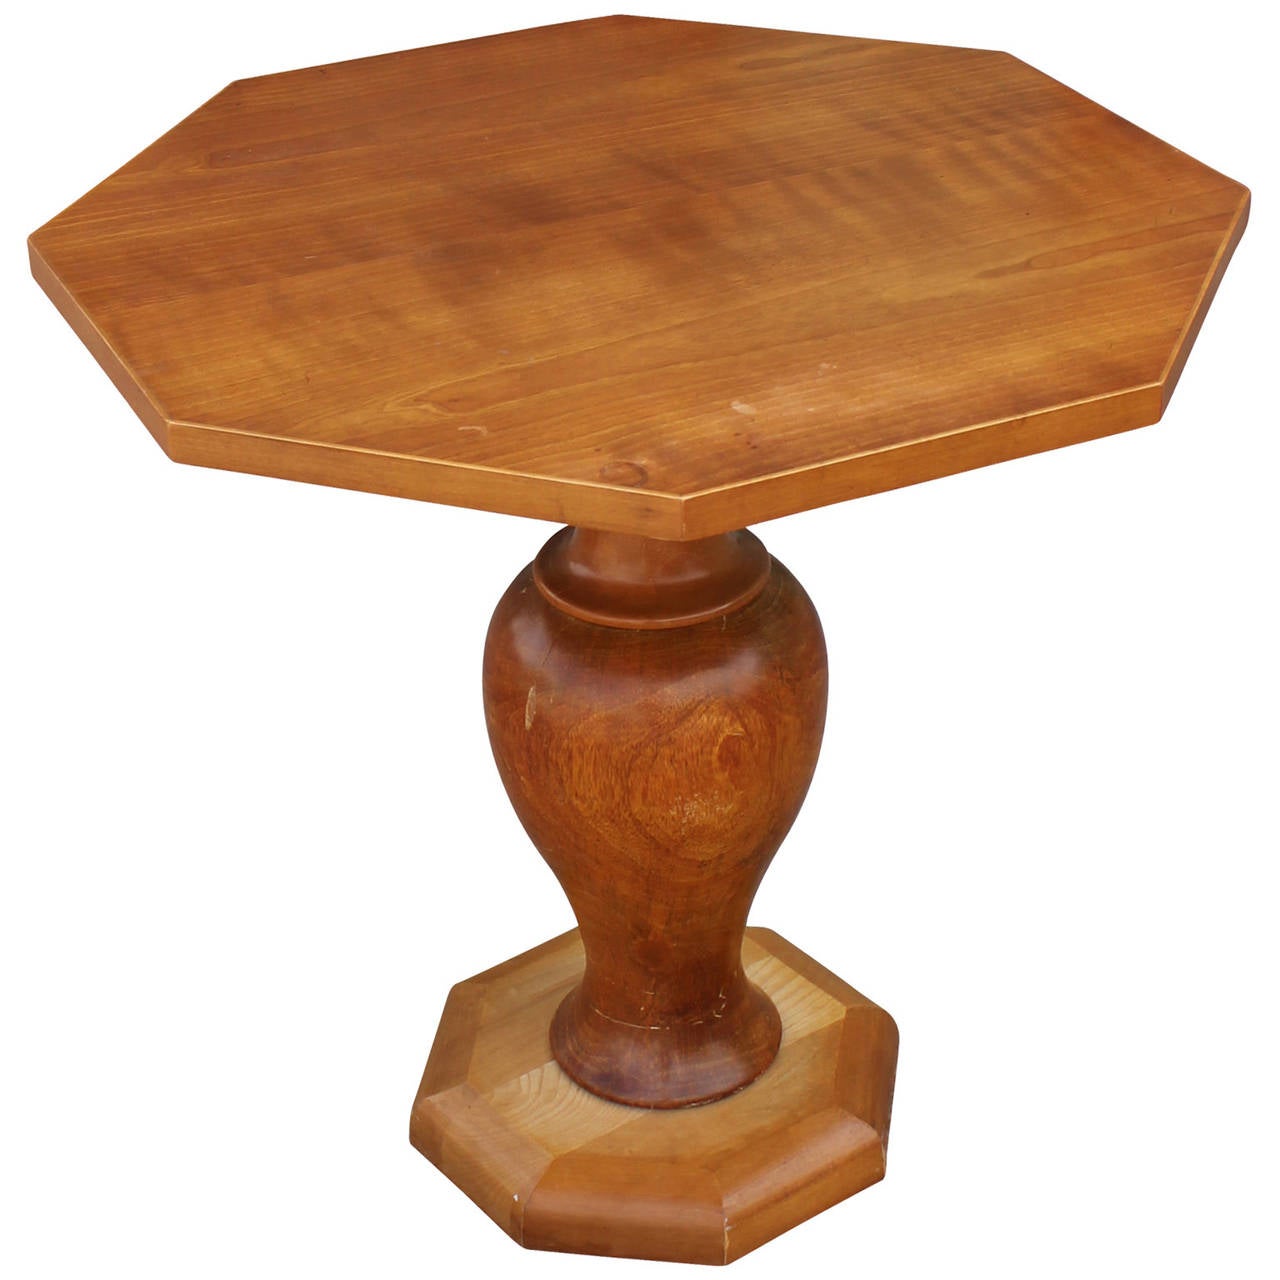 Mid-Century Modern Octagonal Maple Side Table on a Turned Wood Base